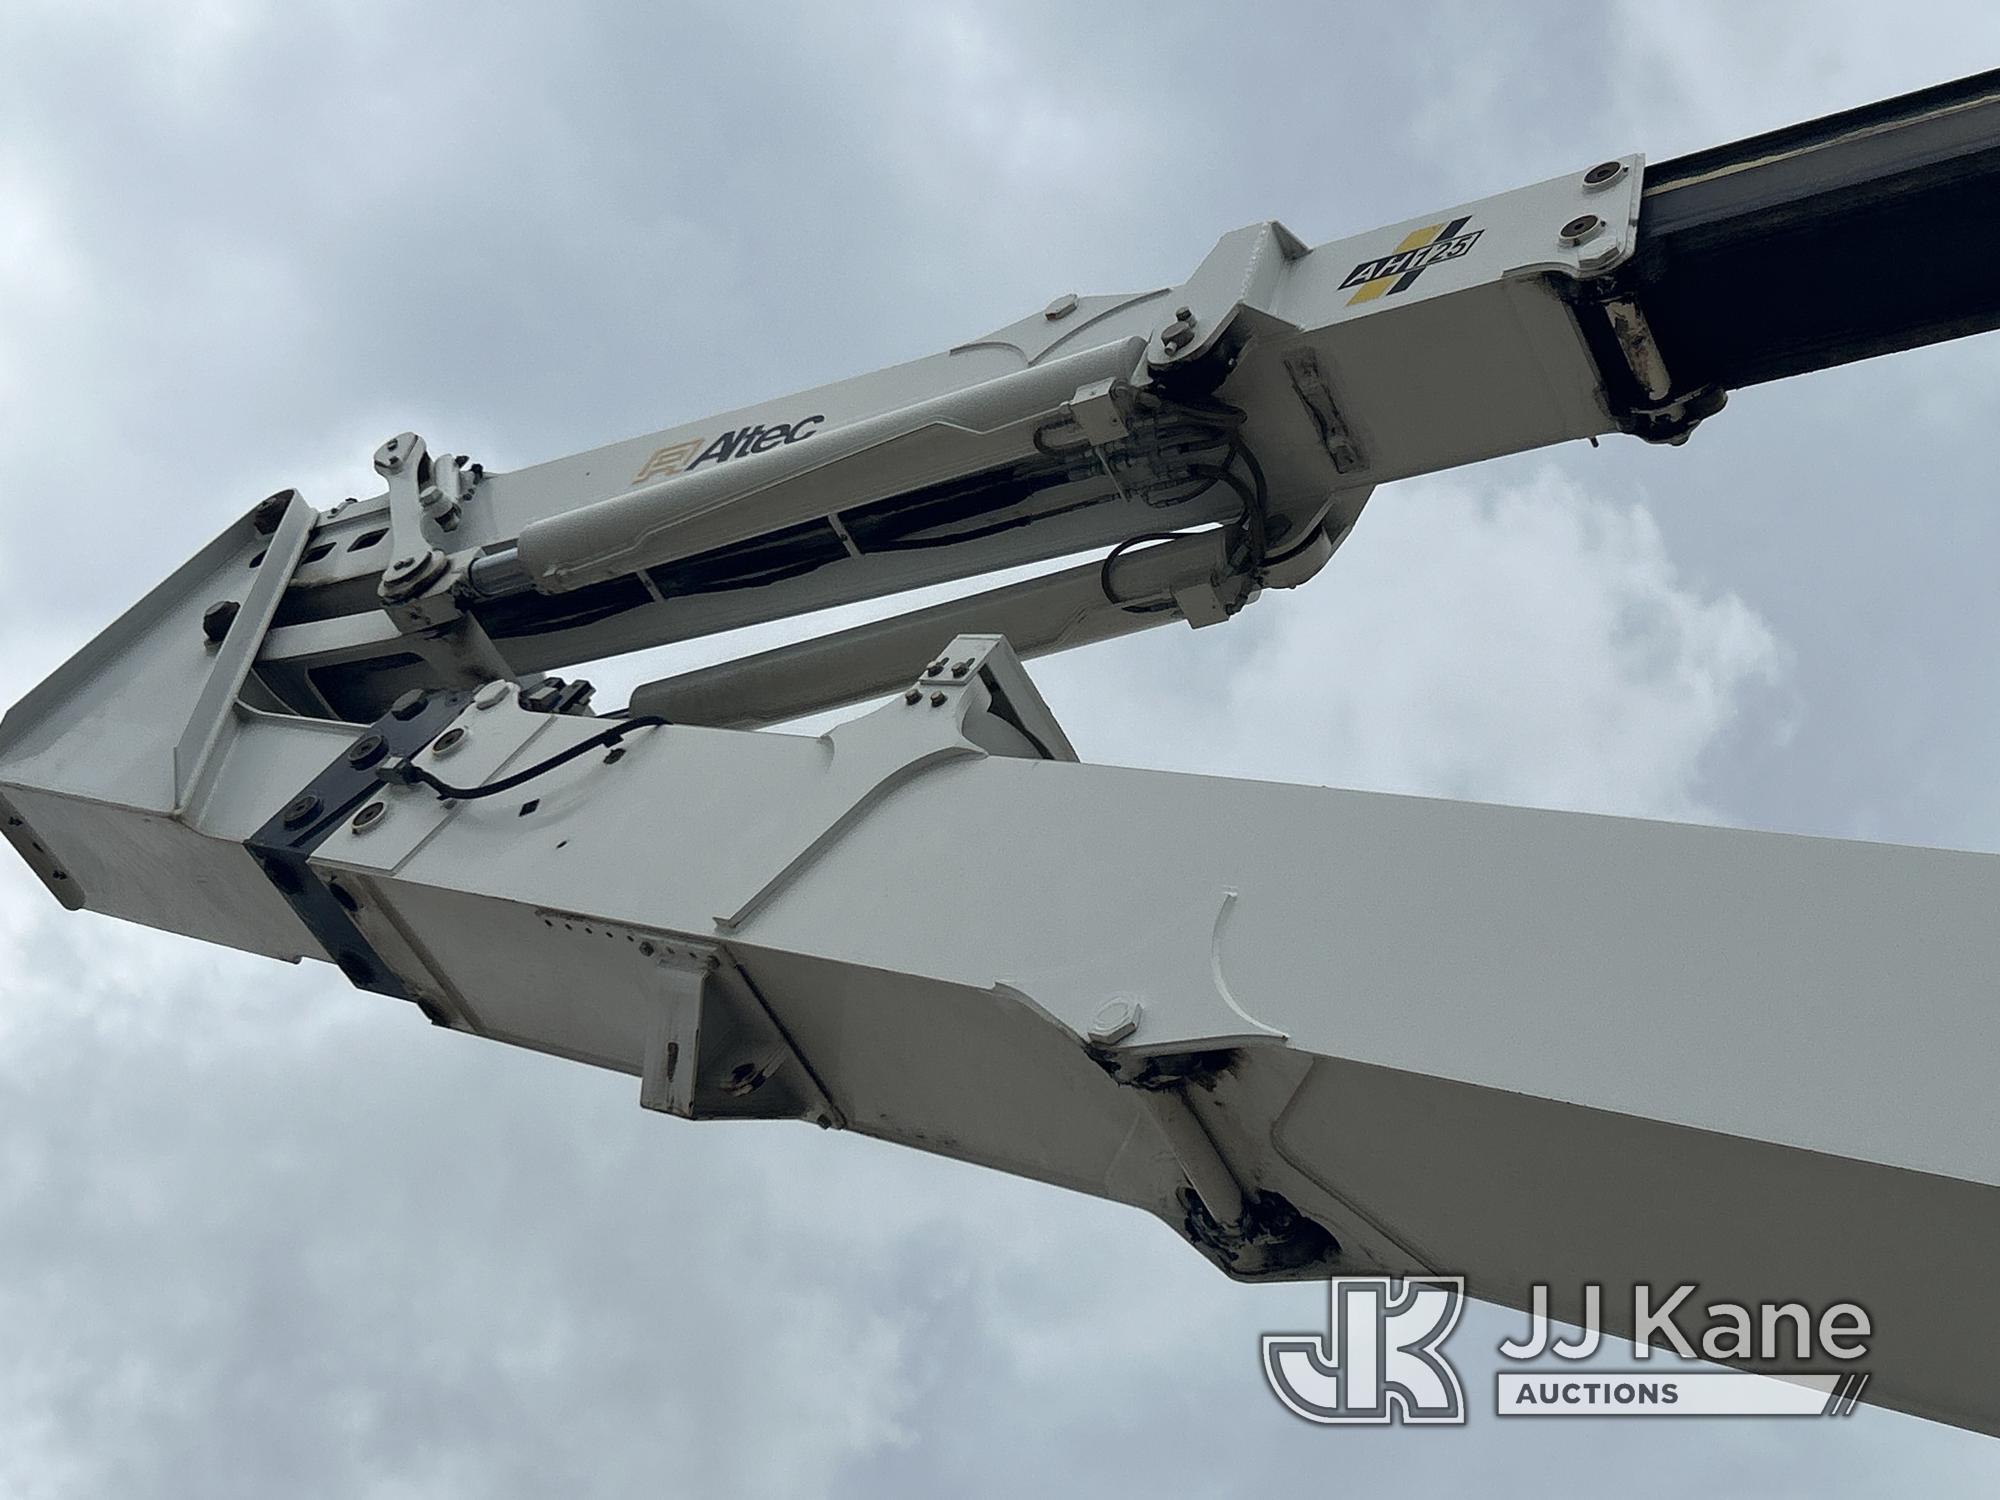 (Waxahachie, TX) Altec AH125, Articulating & Telescopic Material Handling Platform Lift rear mounted